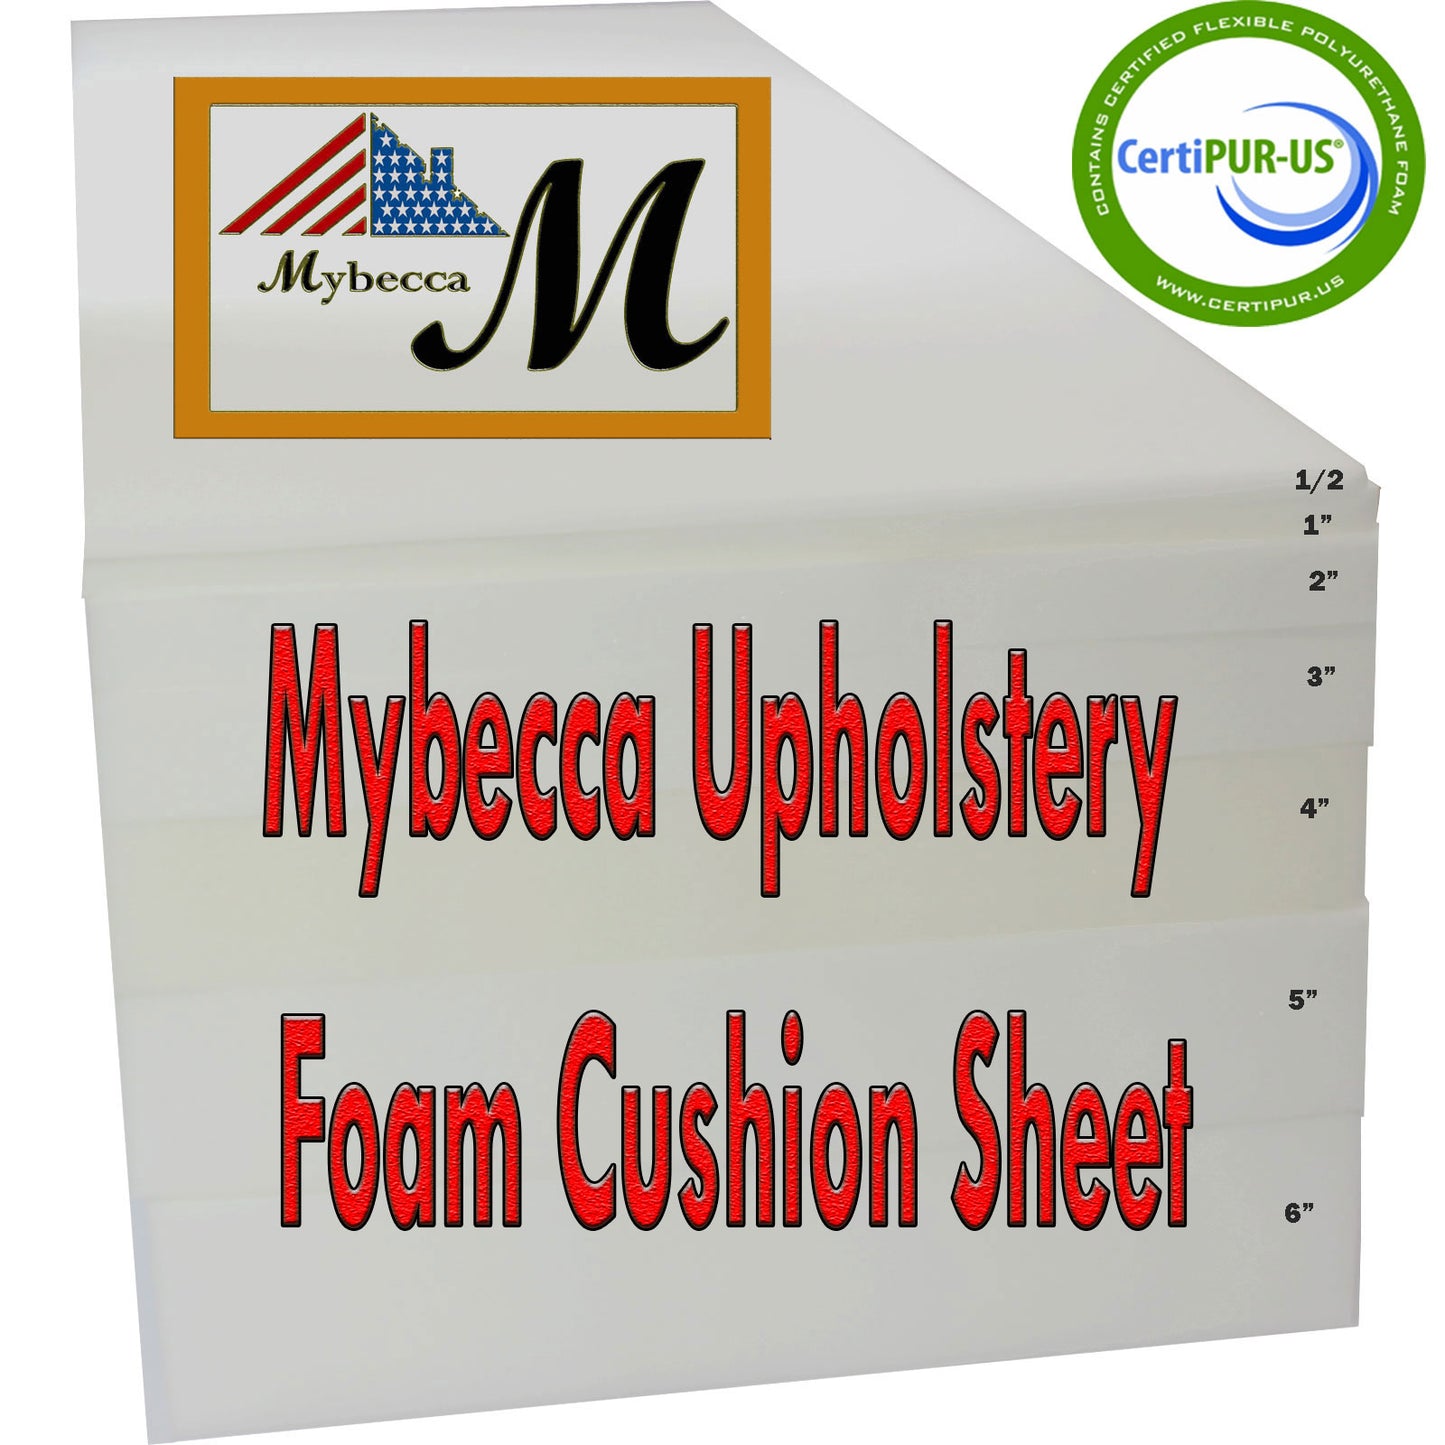 Mybecca 6" x 24" x 24" High Density Upholstery Foam Cushion (Seat Replacement, Upholstery Sheet, Foam Padding)